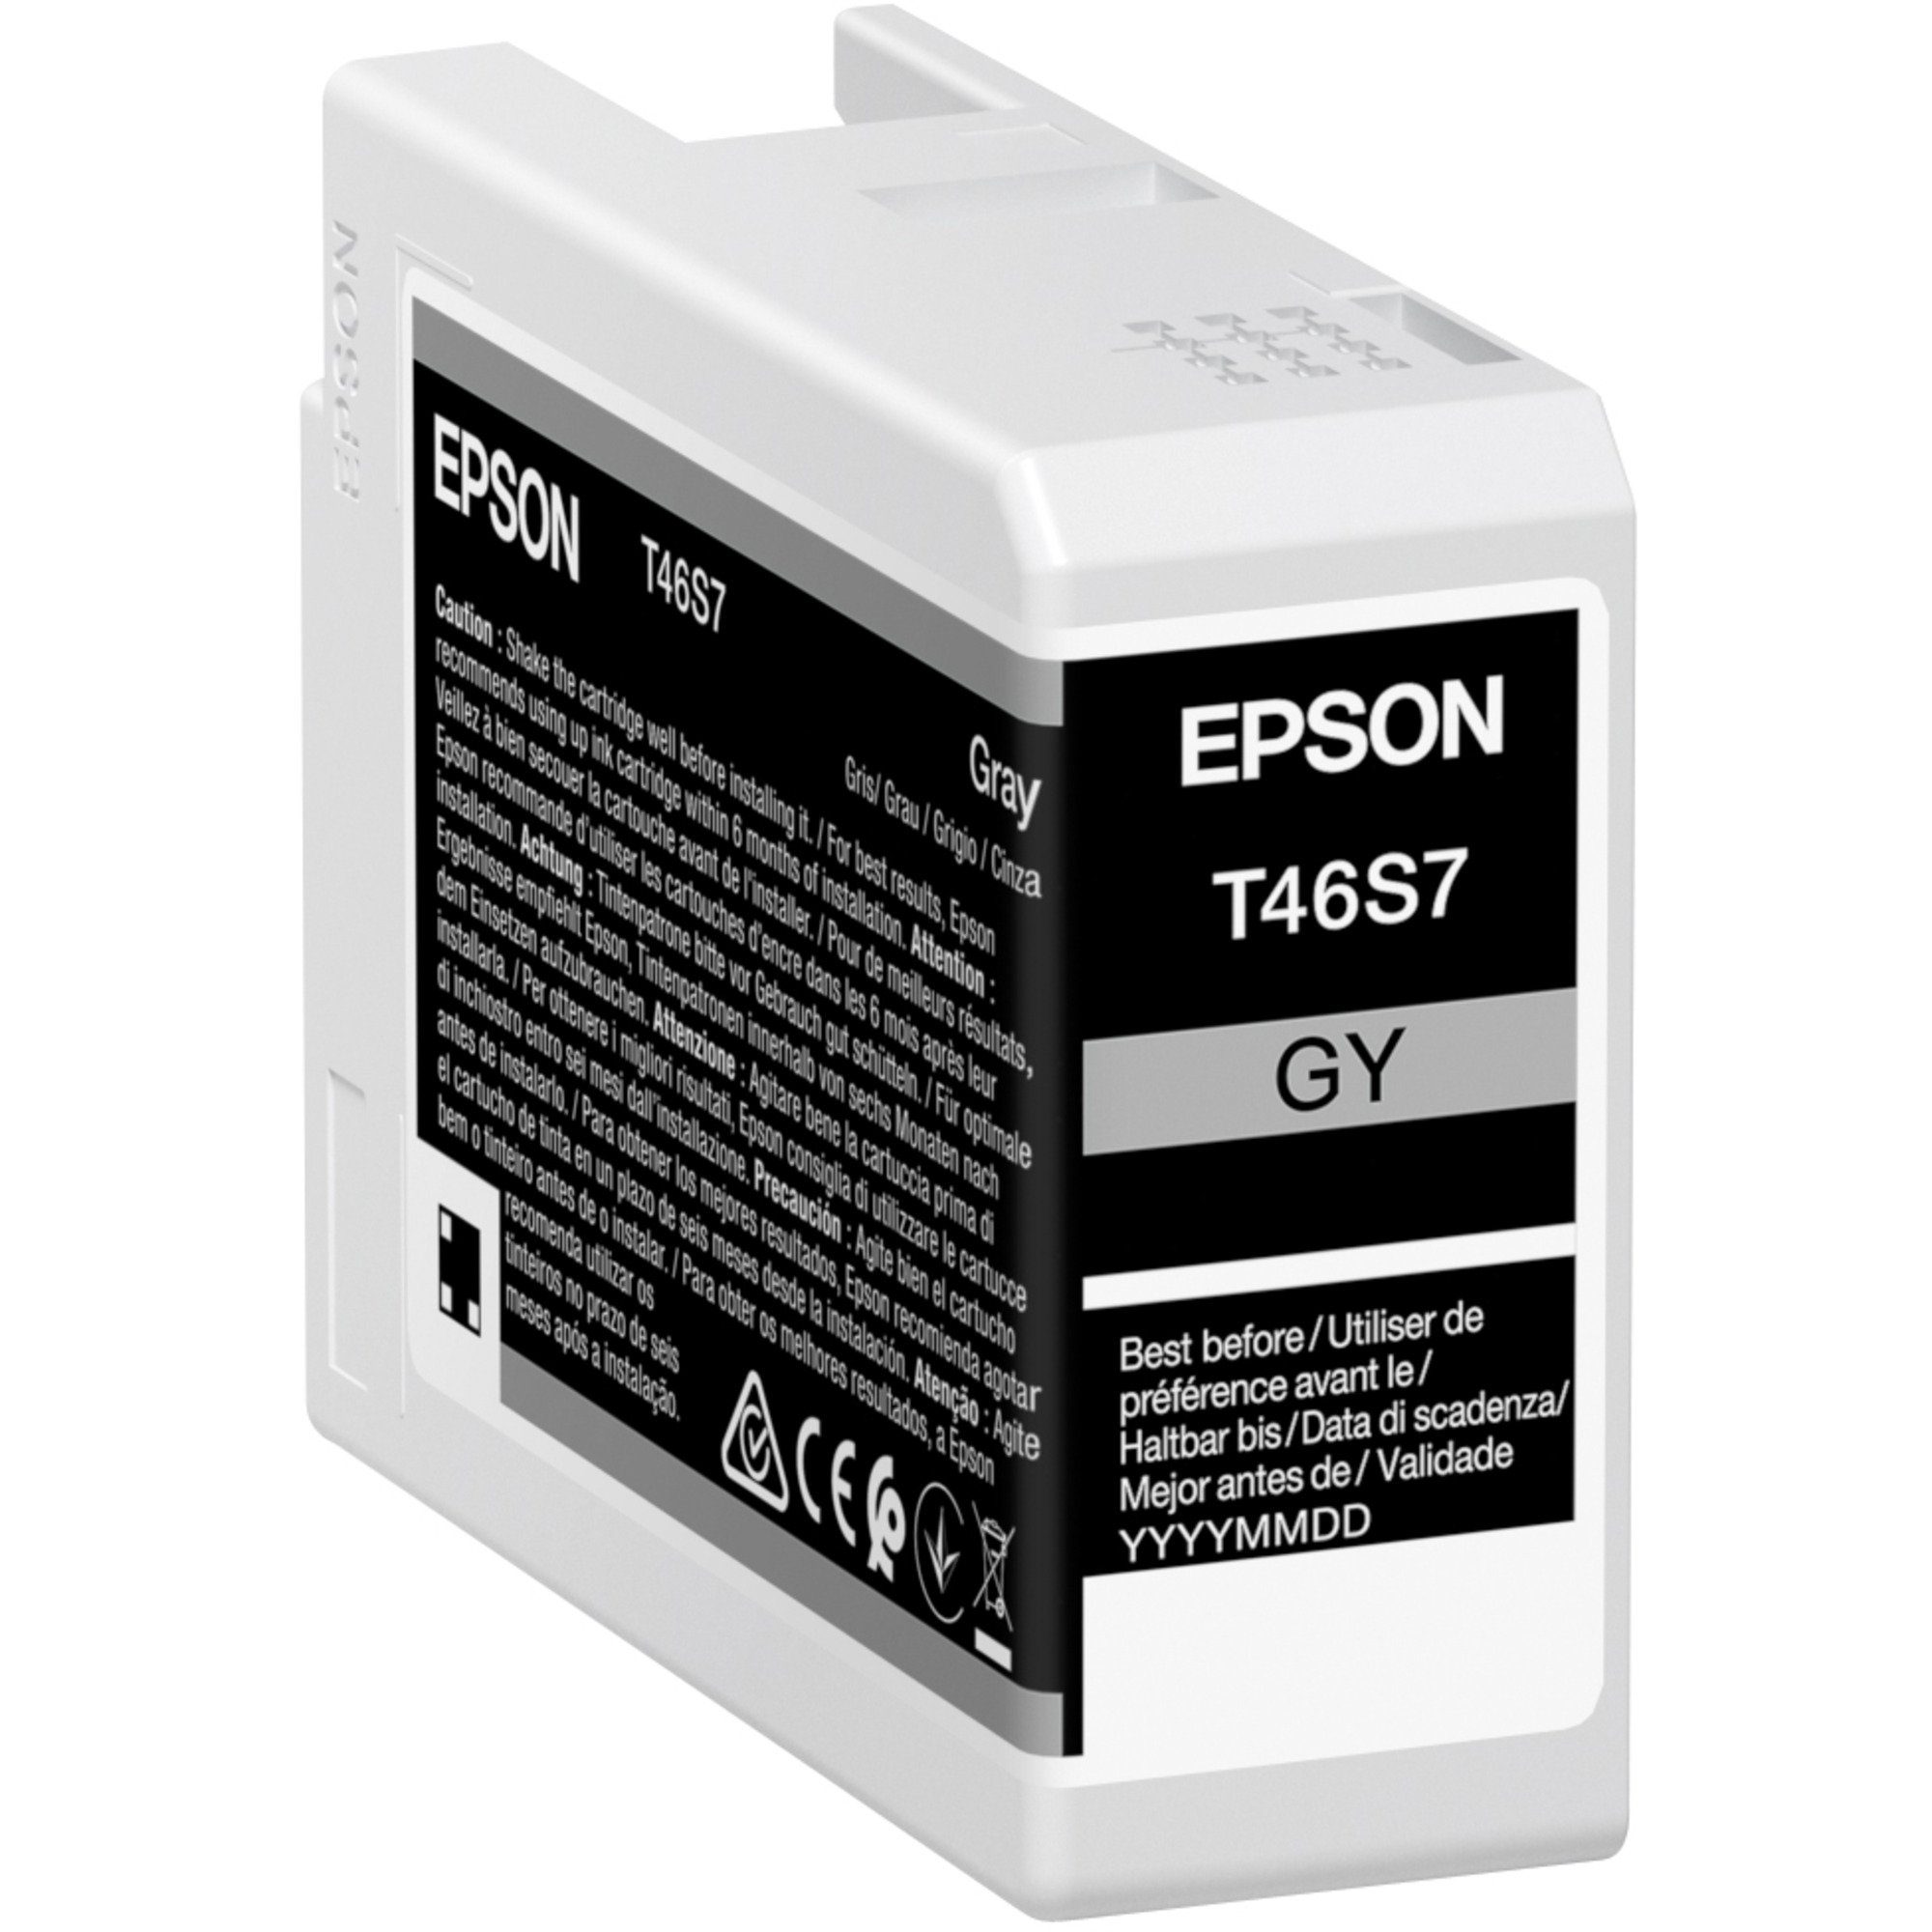 Epson Tintenpatrone (C13T46S700), grau Epson Tinte T46S7 (Ultrachrome